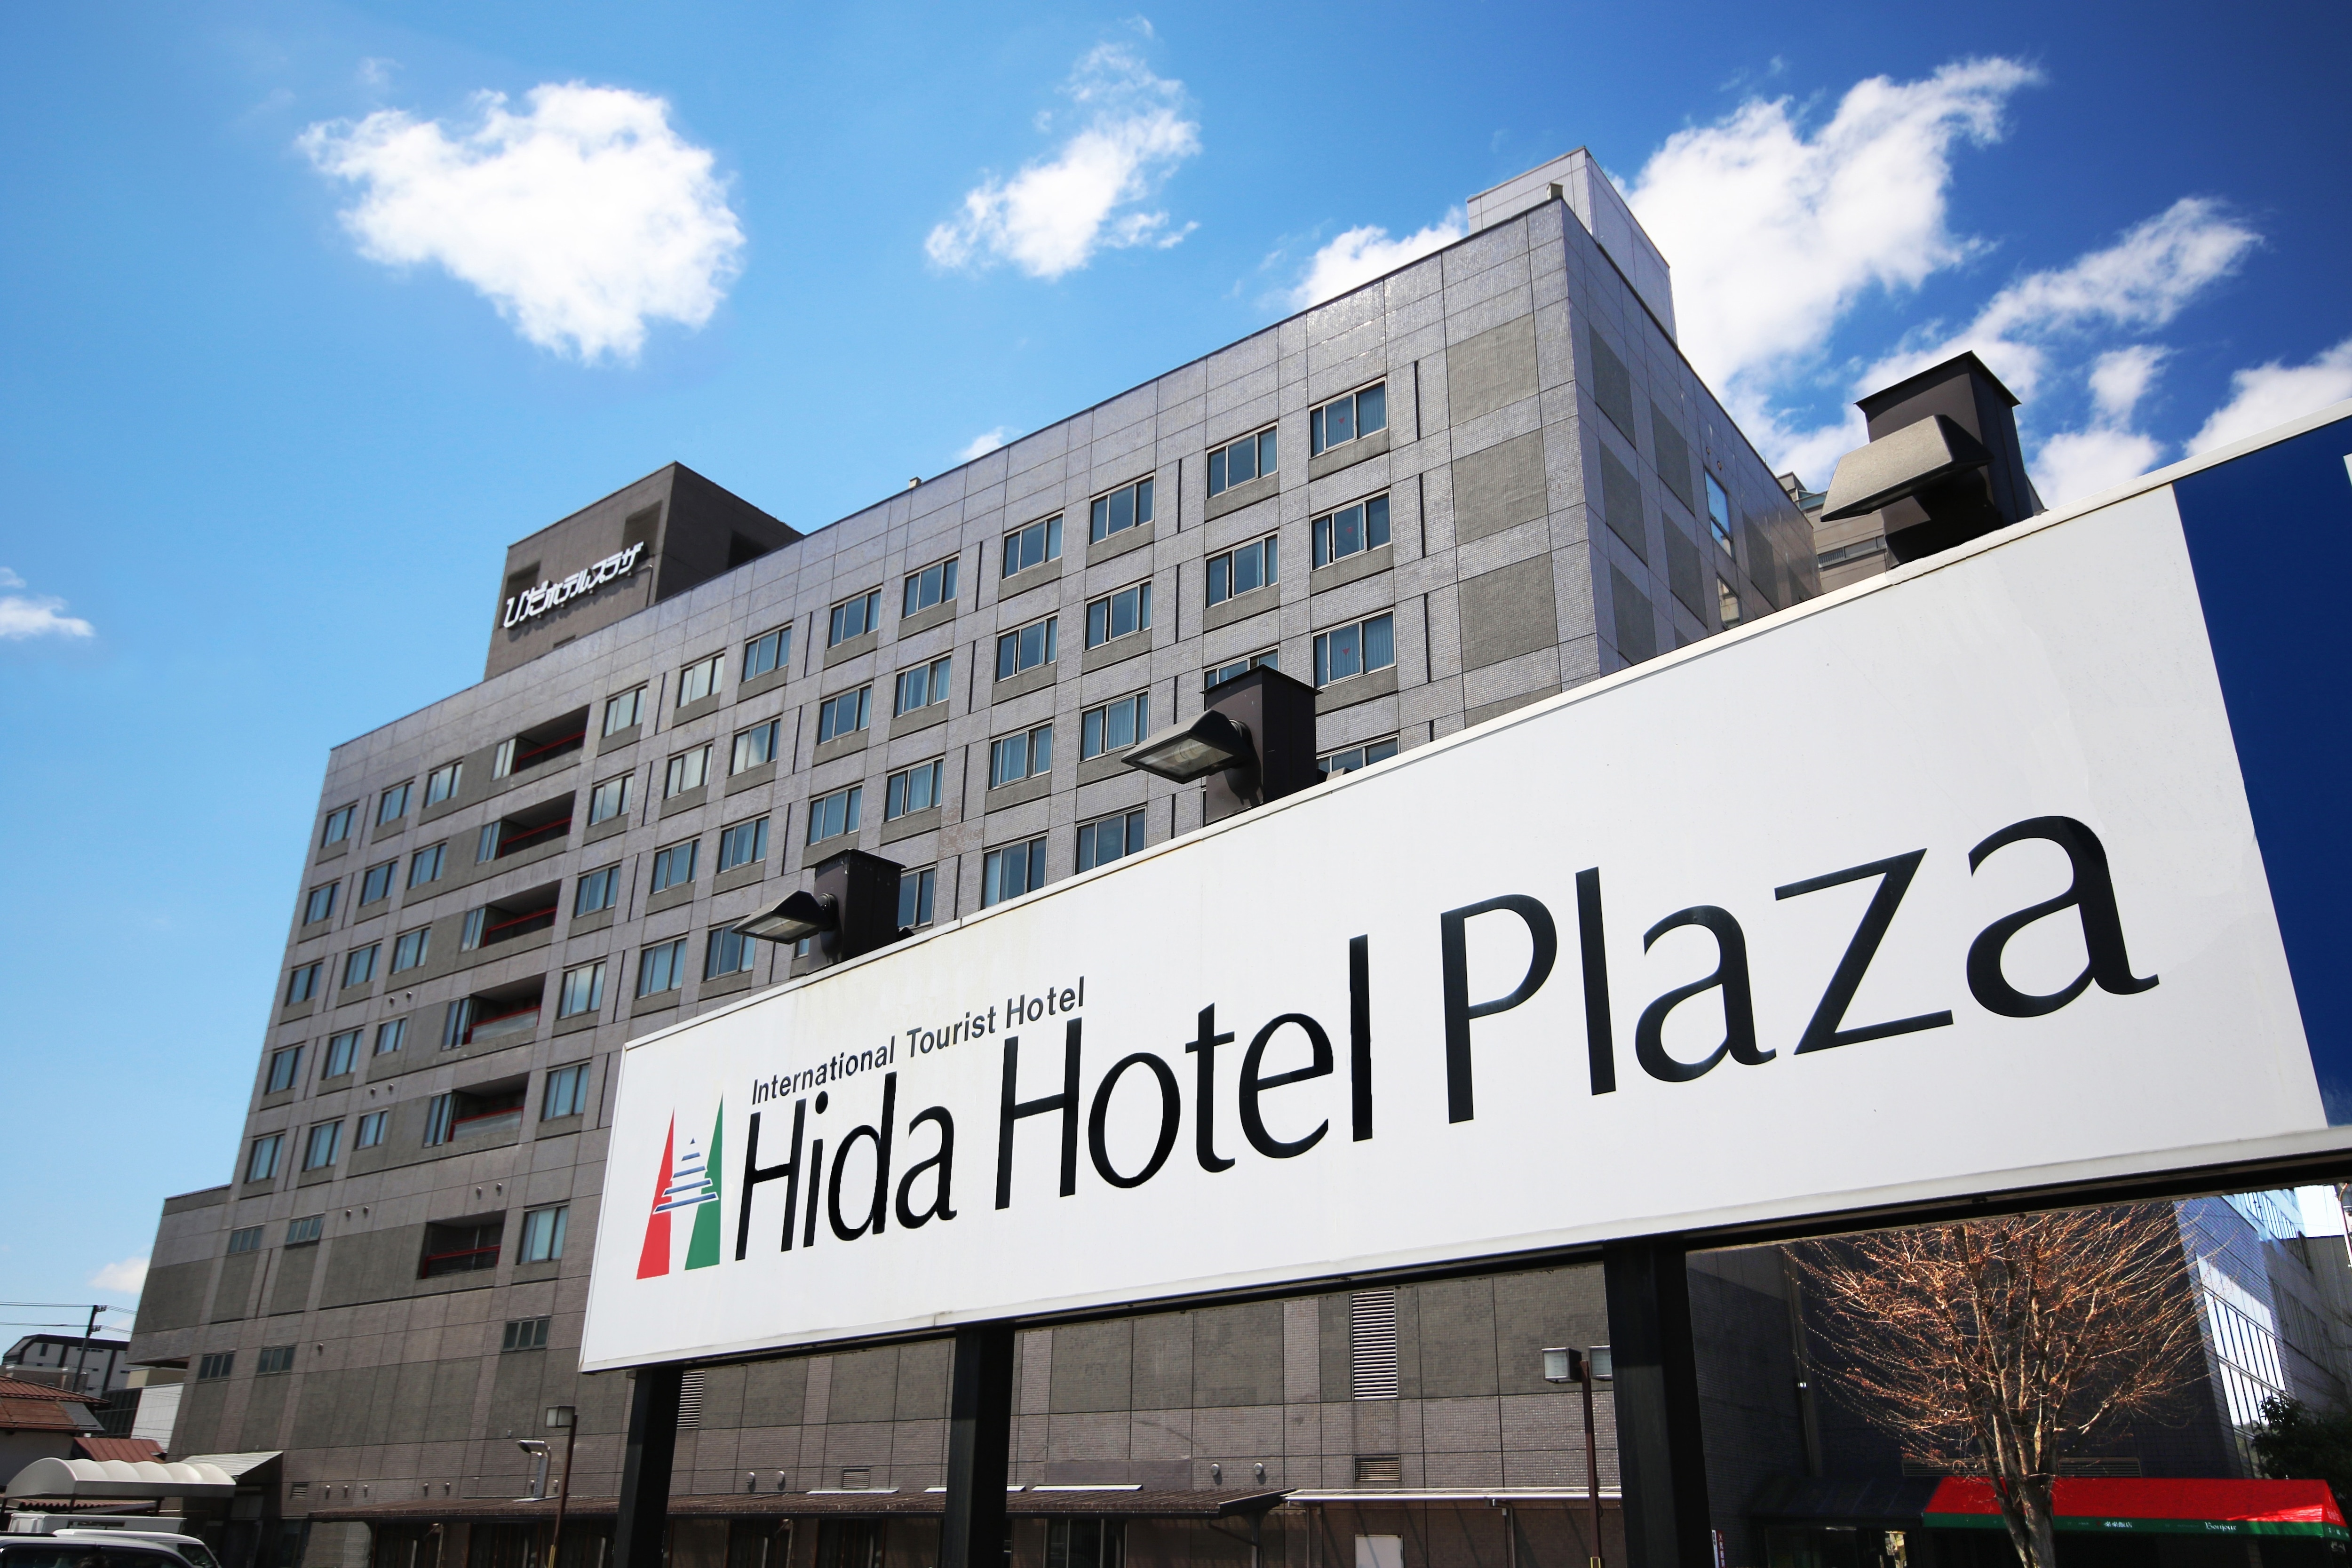 ◇ Hida Takayama Onsen / Hida Hotel Plaza / Full view (East Building and Kita Building)